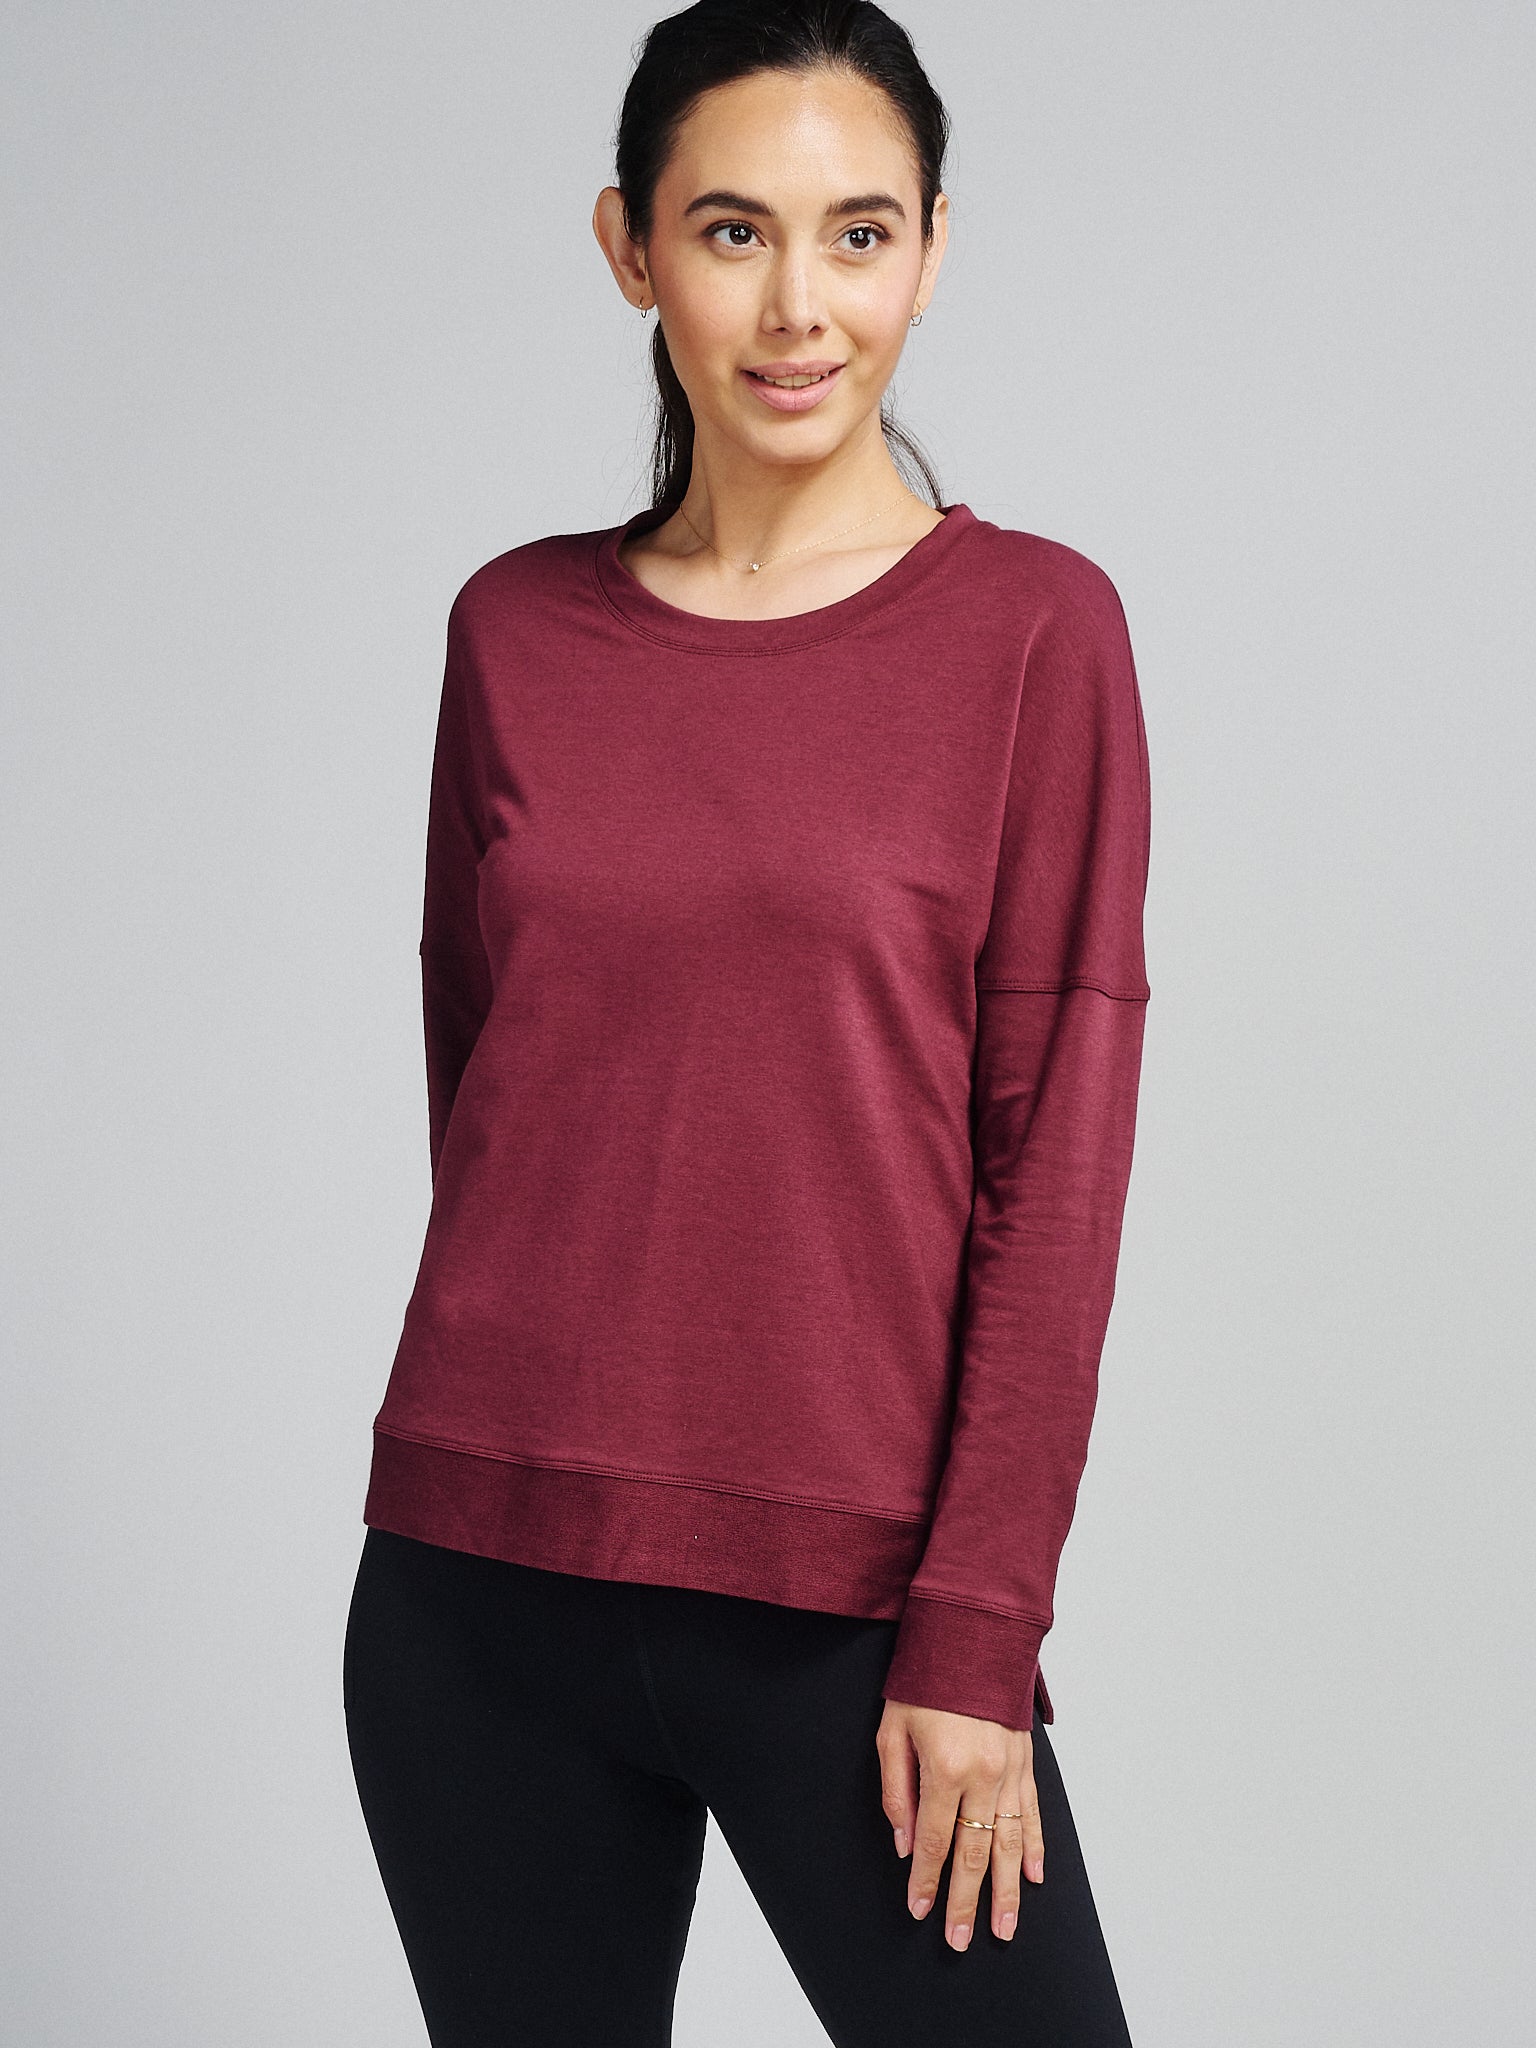 Women's sweatshirt breathable fabric, Shop